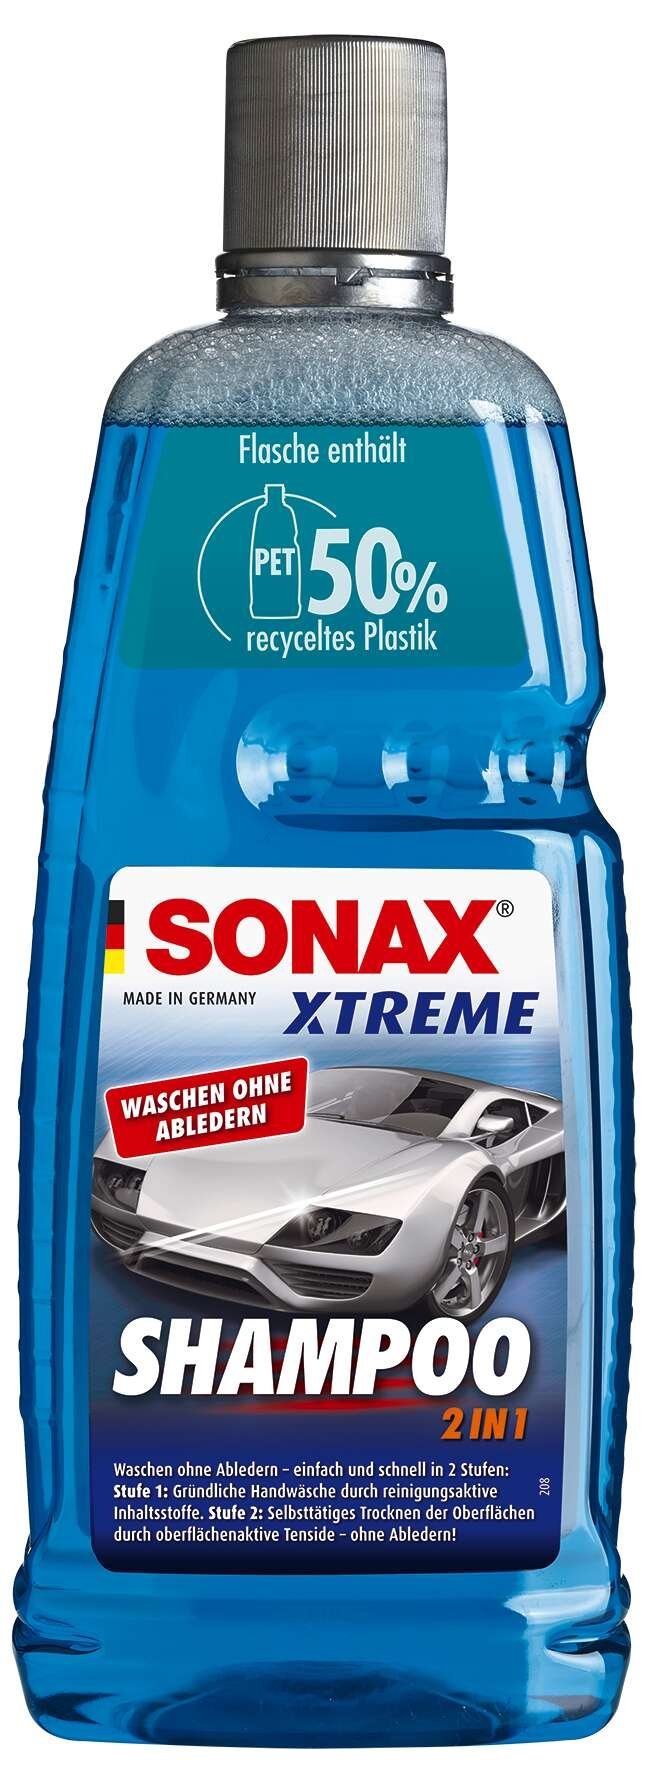 SONAX XTREME Shampoo 2in1 1000 ml PET bottle